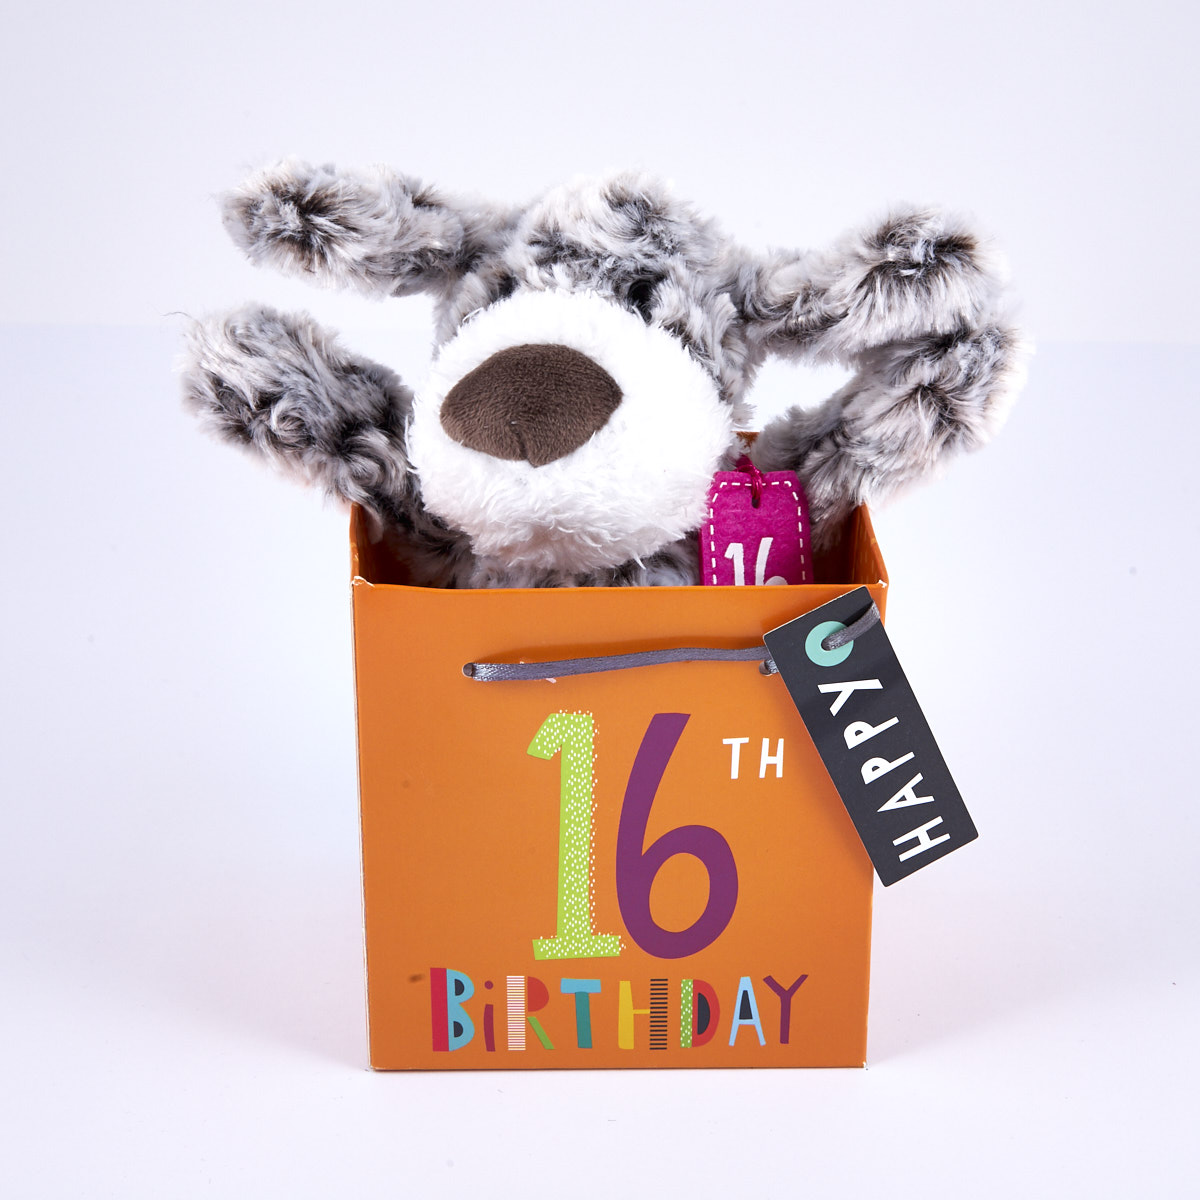 16th Birthday - Grey & White Dog In Gift Bag